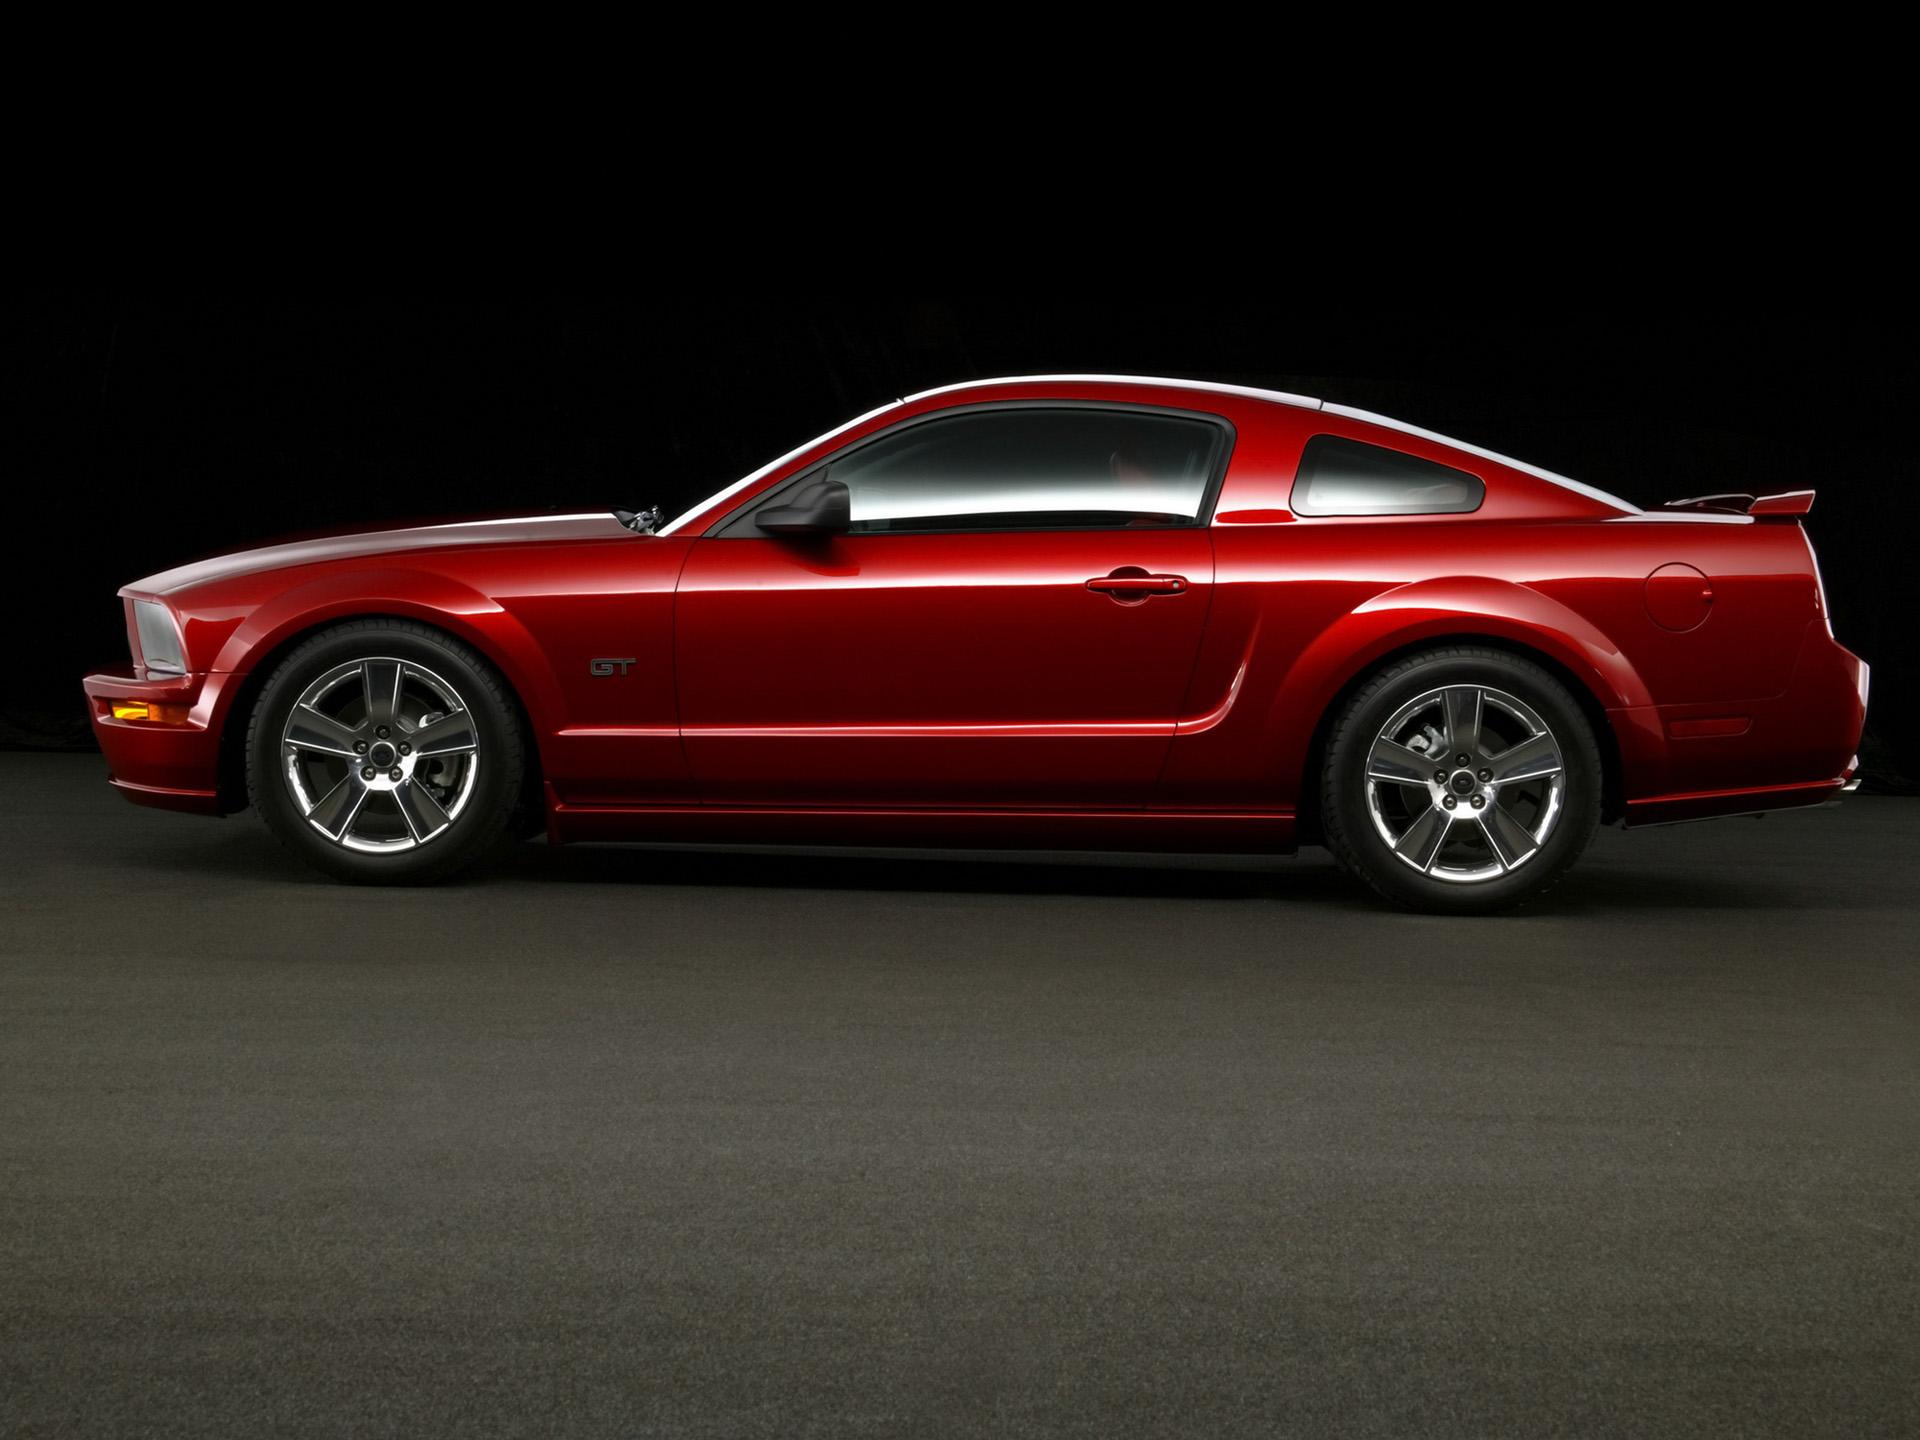 Ford Mustang GT 2005 Studio < Cars < Vehicles < Desktop